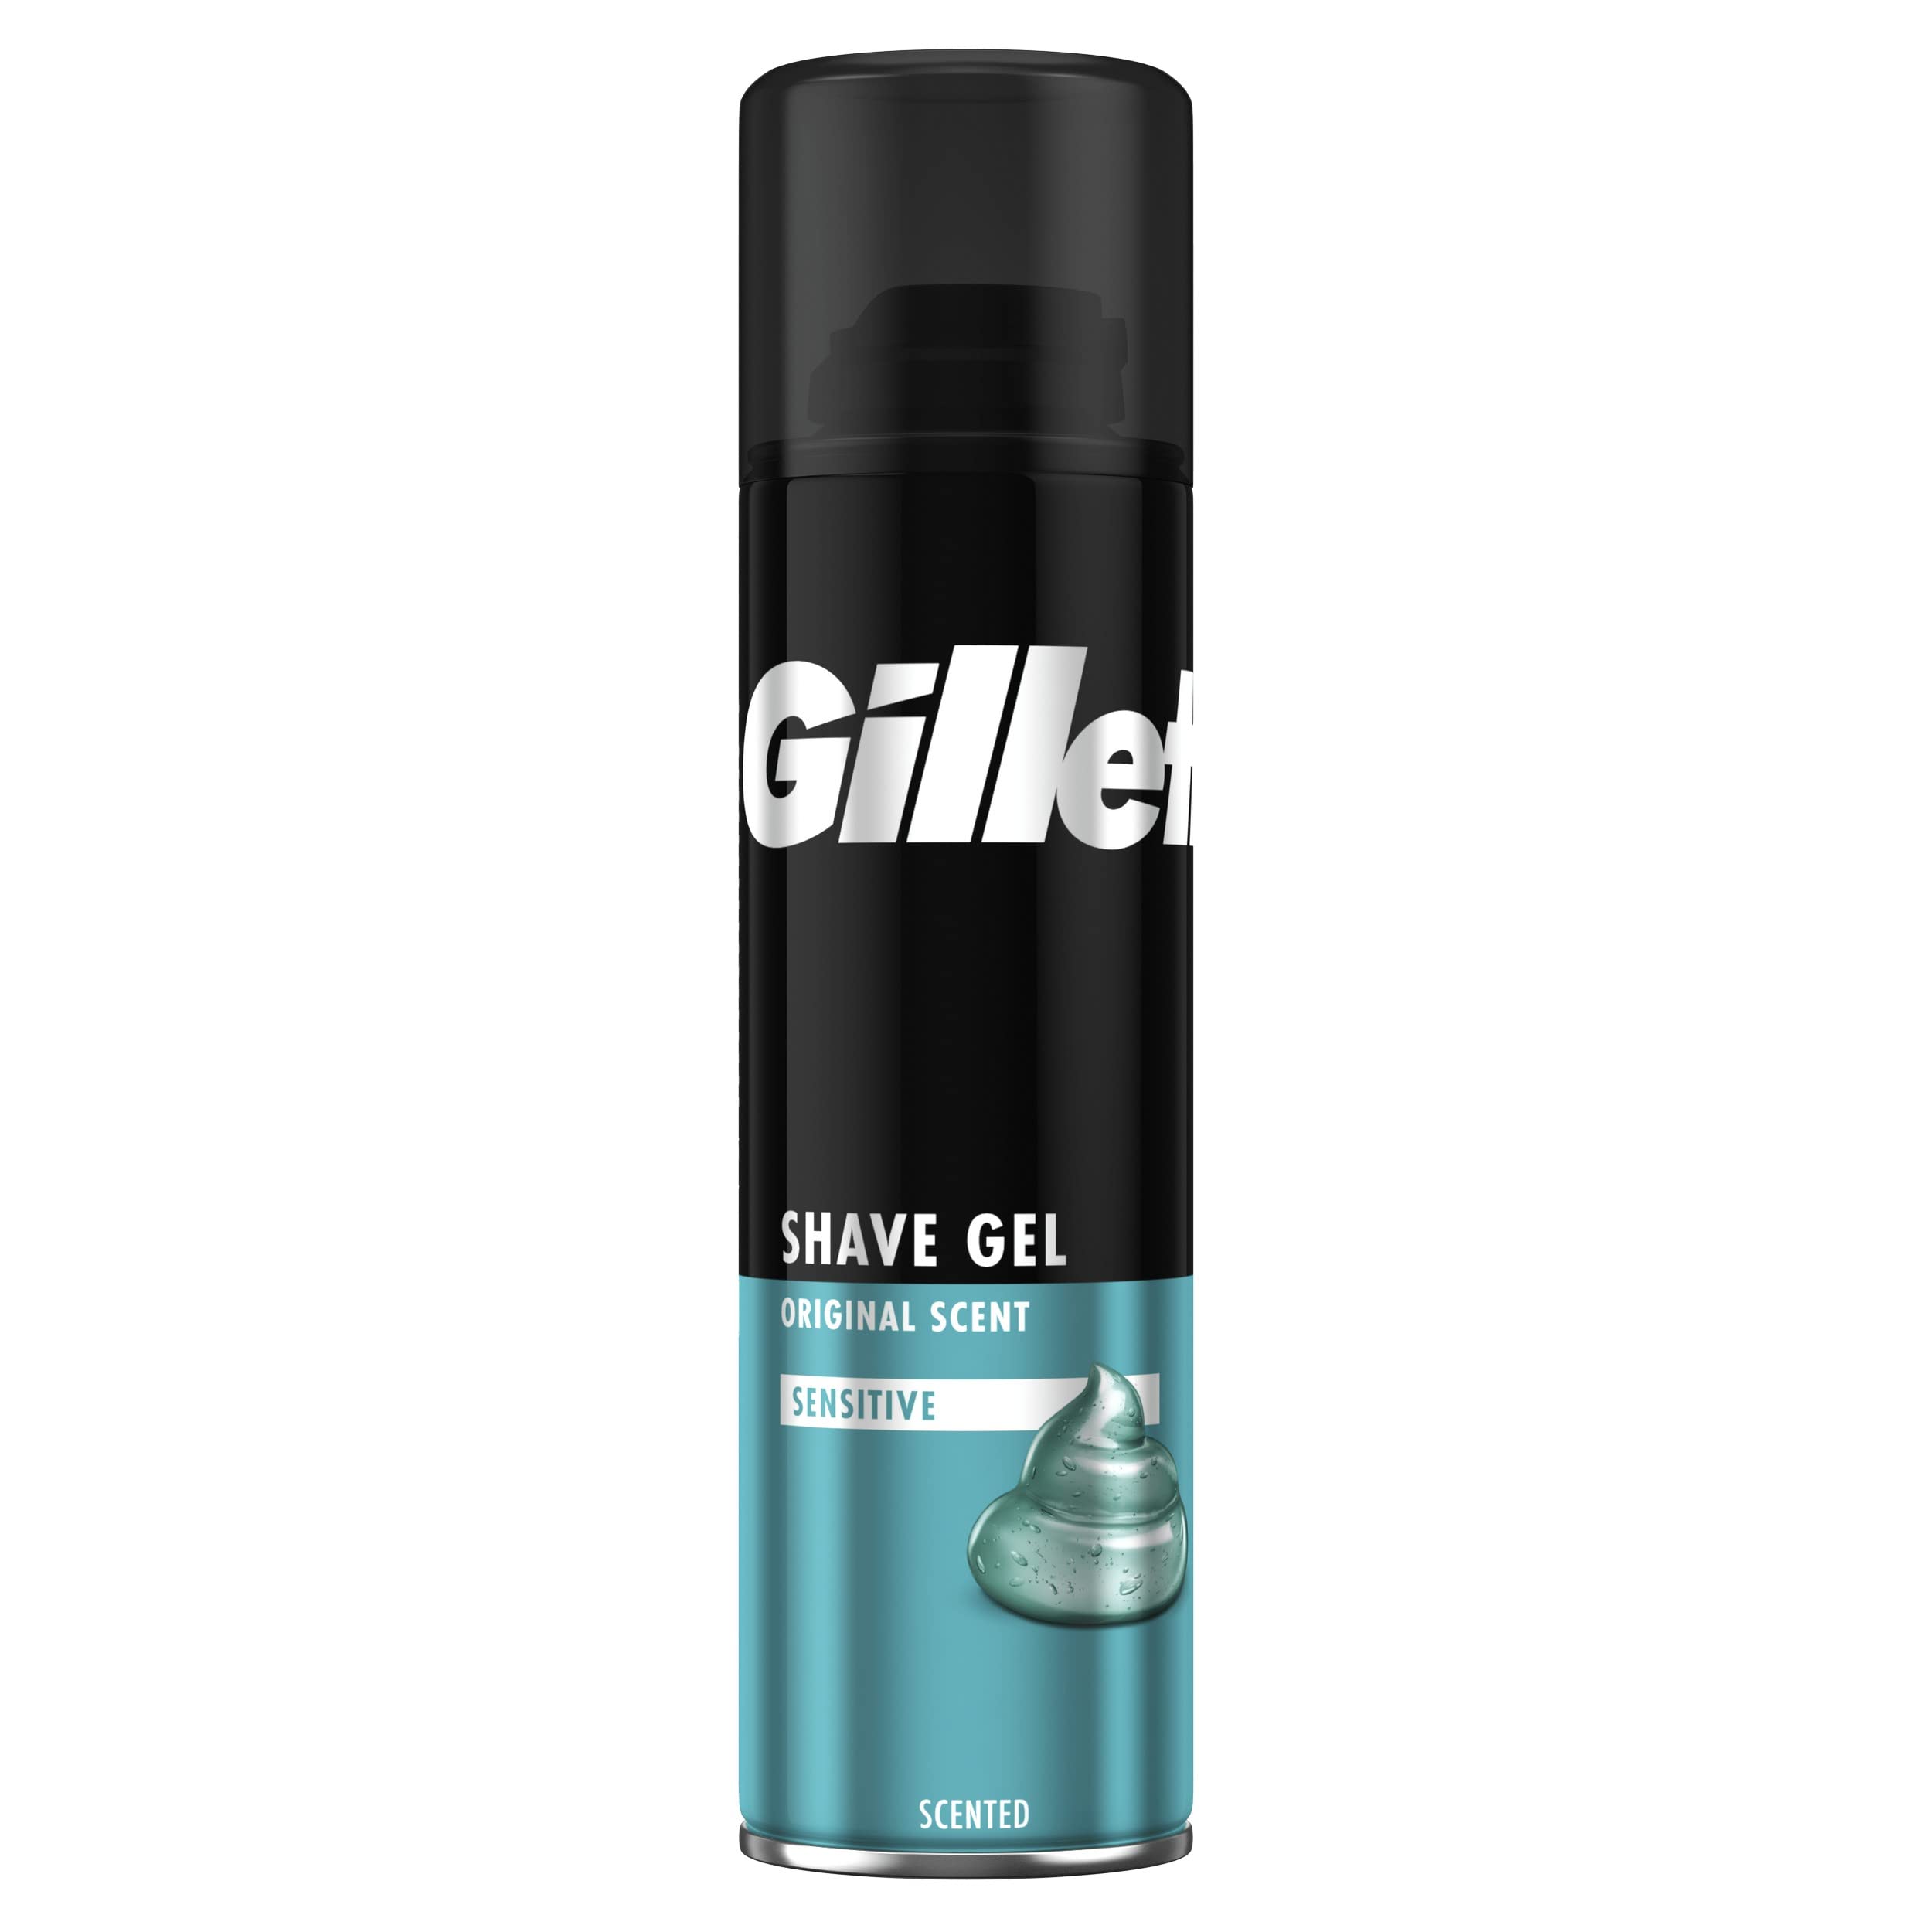 Gillette Shaving Gel: The Sensible Choice for Sensitive Skin